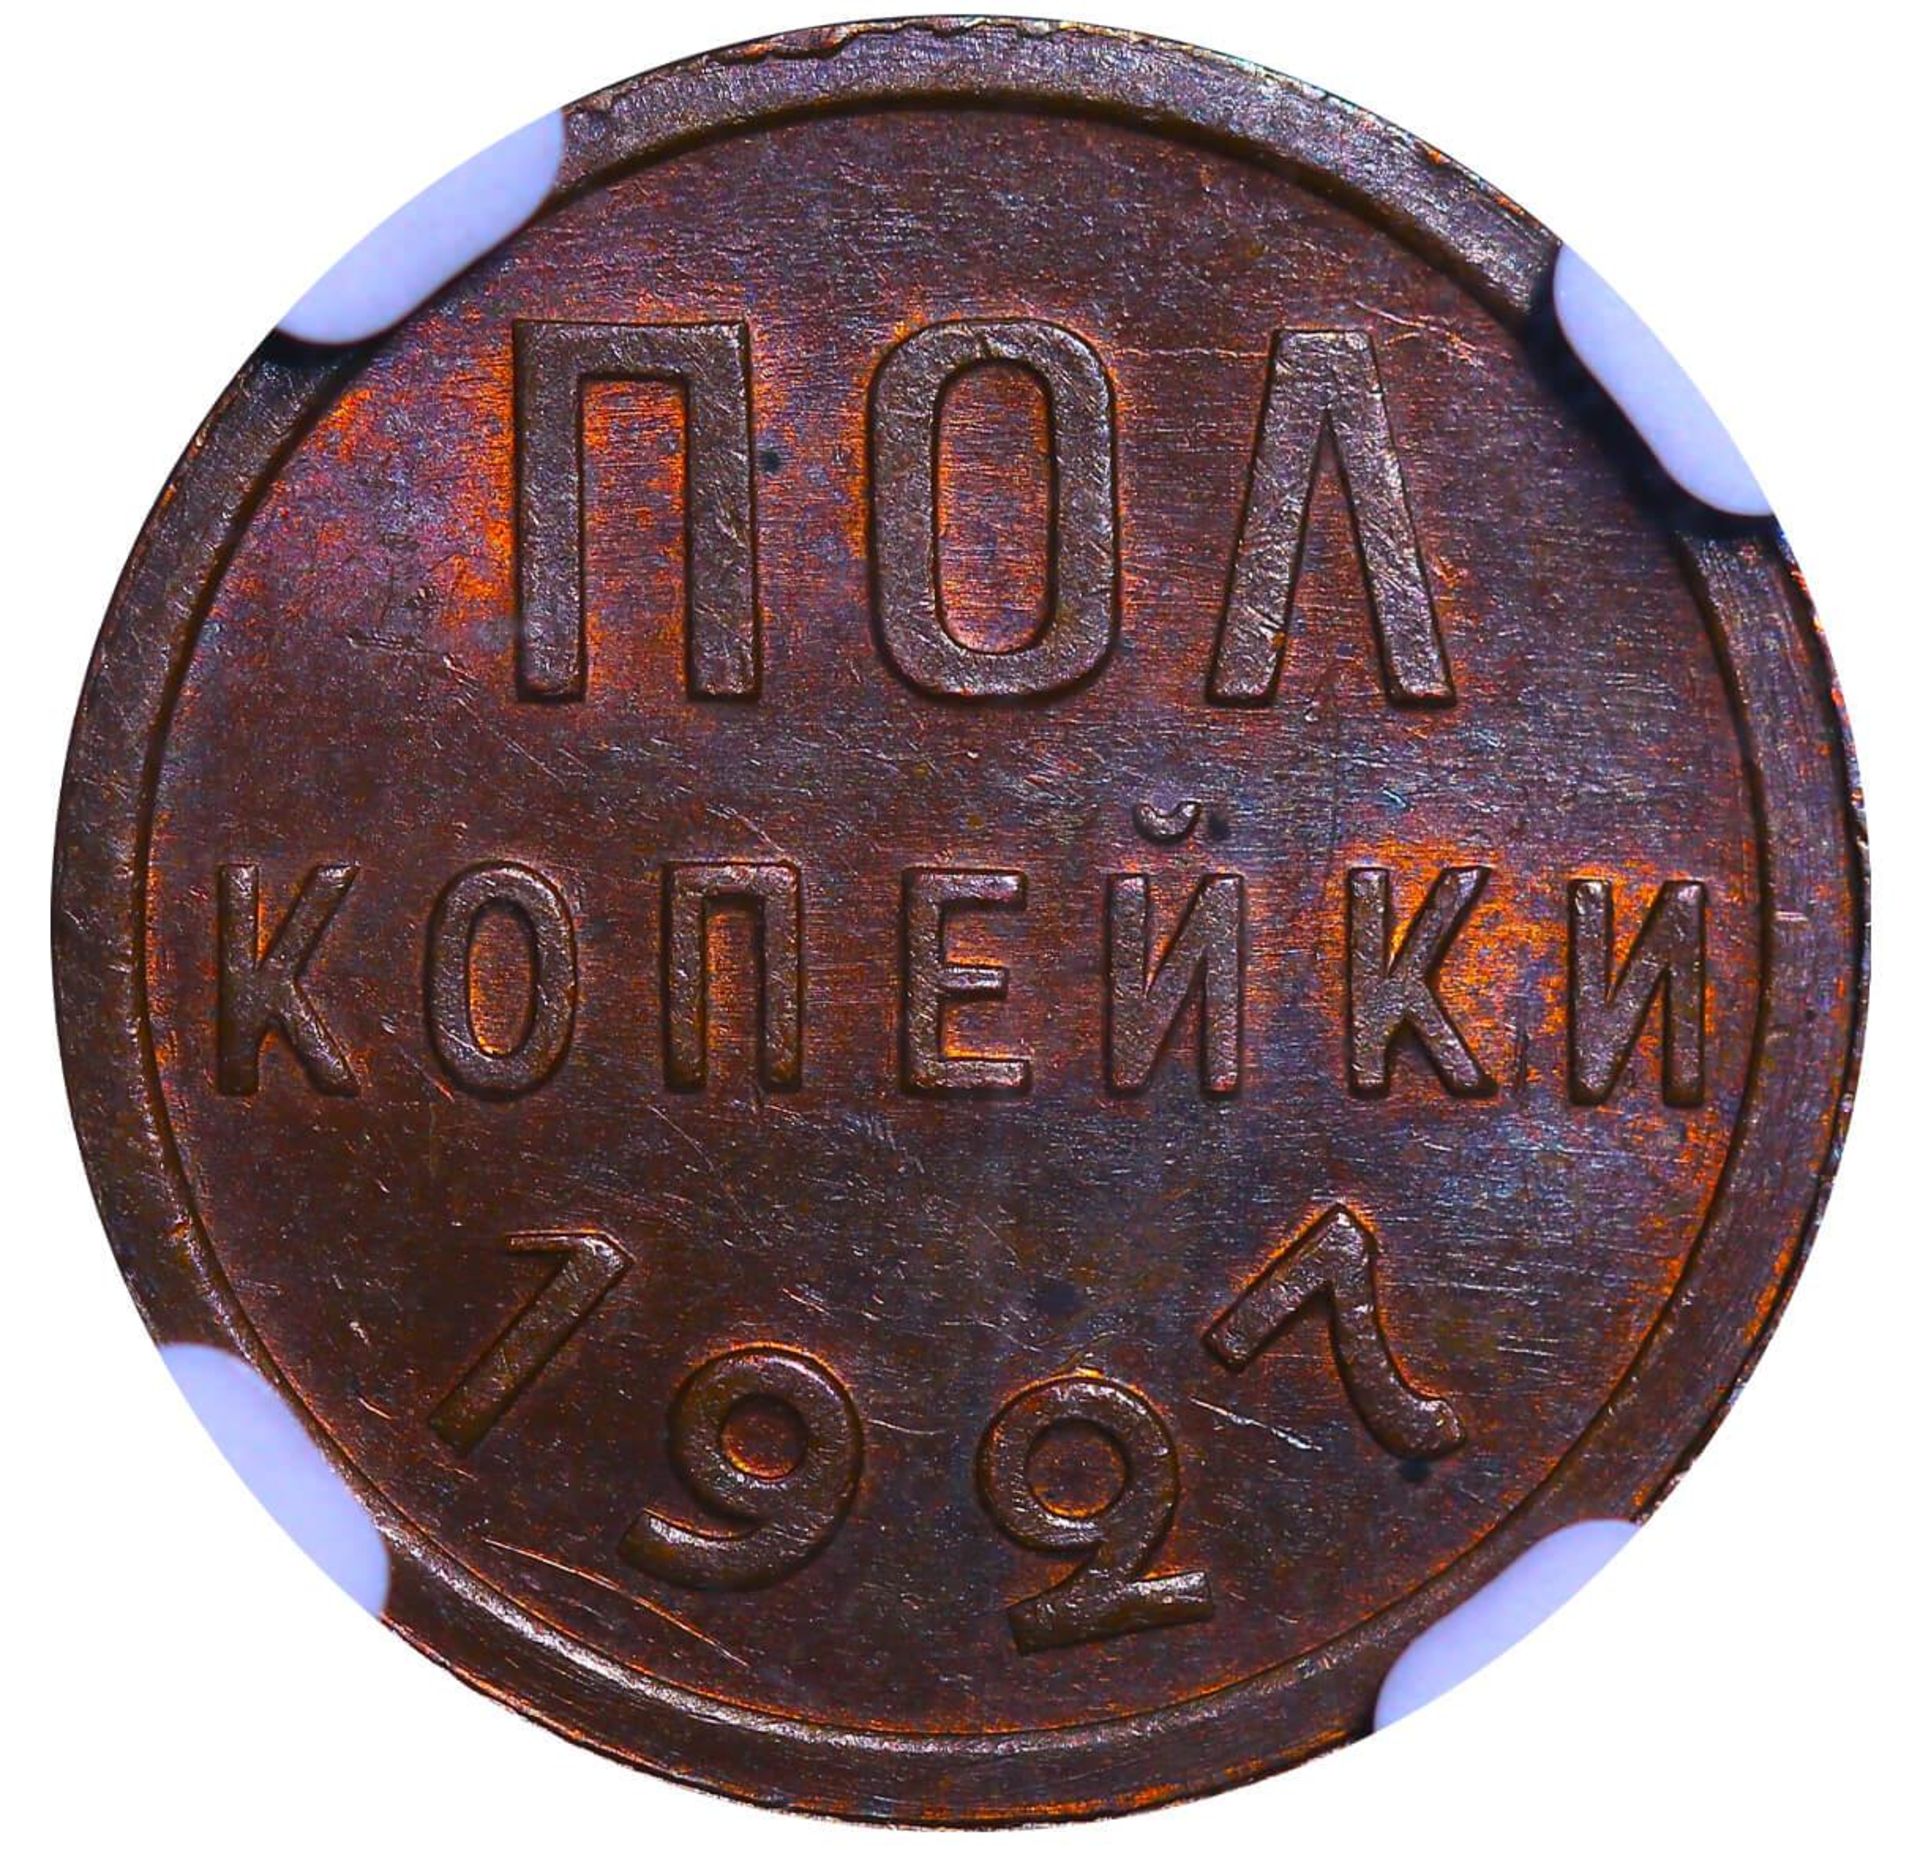 Soviet Union, ½ Kopeck, 1927 year, NGC, MS 64 BN - Image 3 of 3